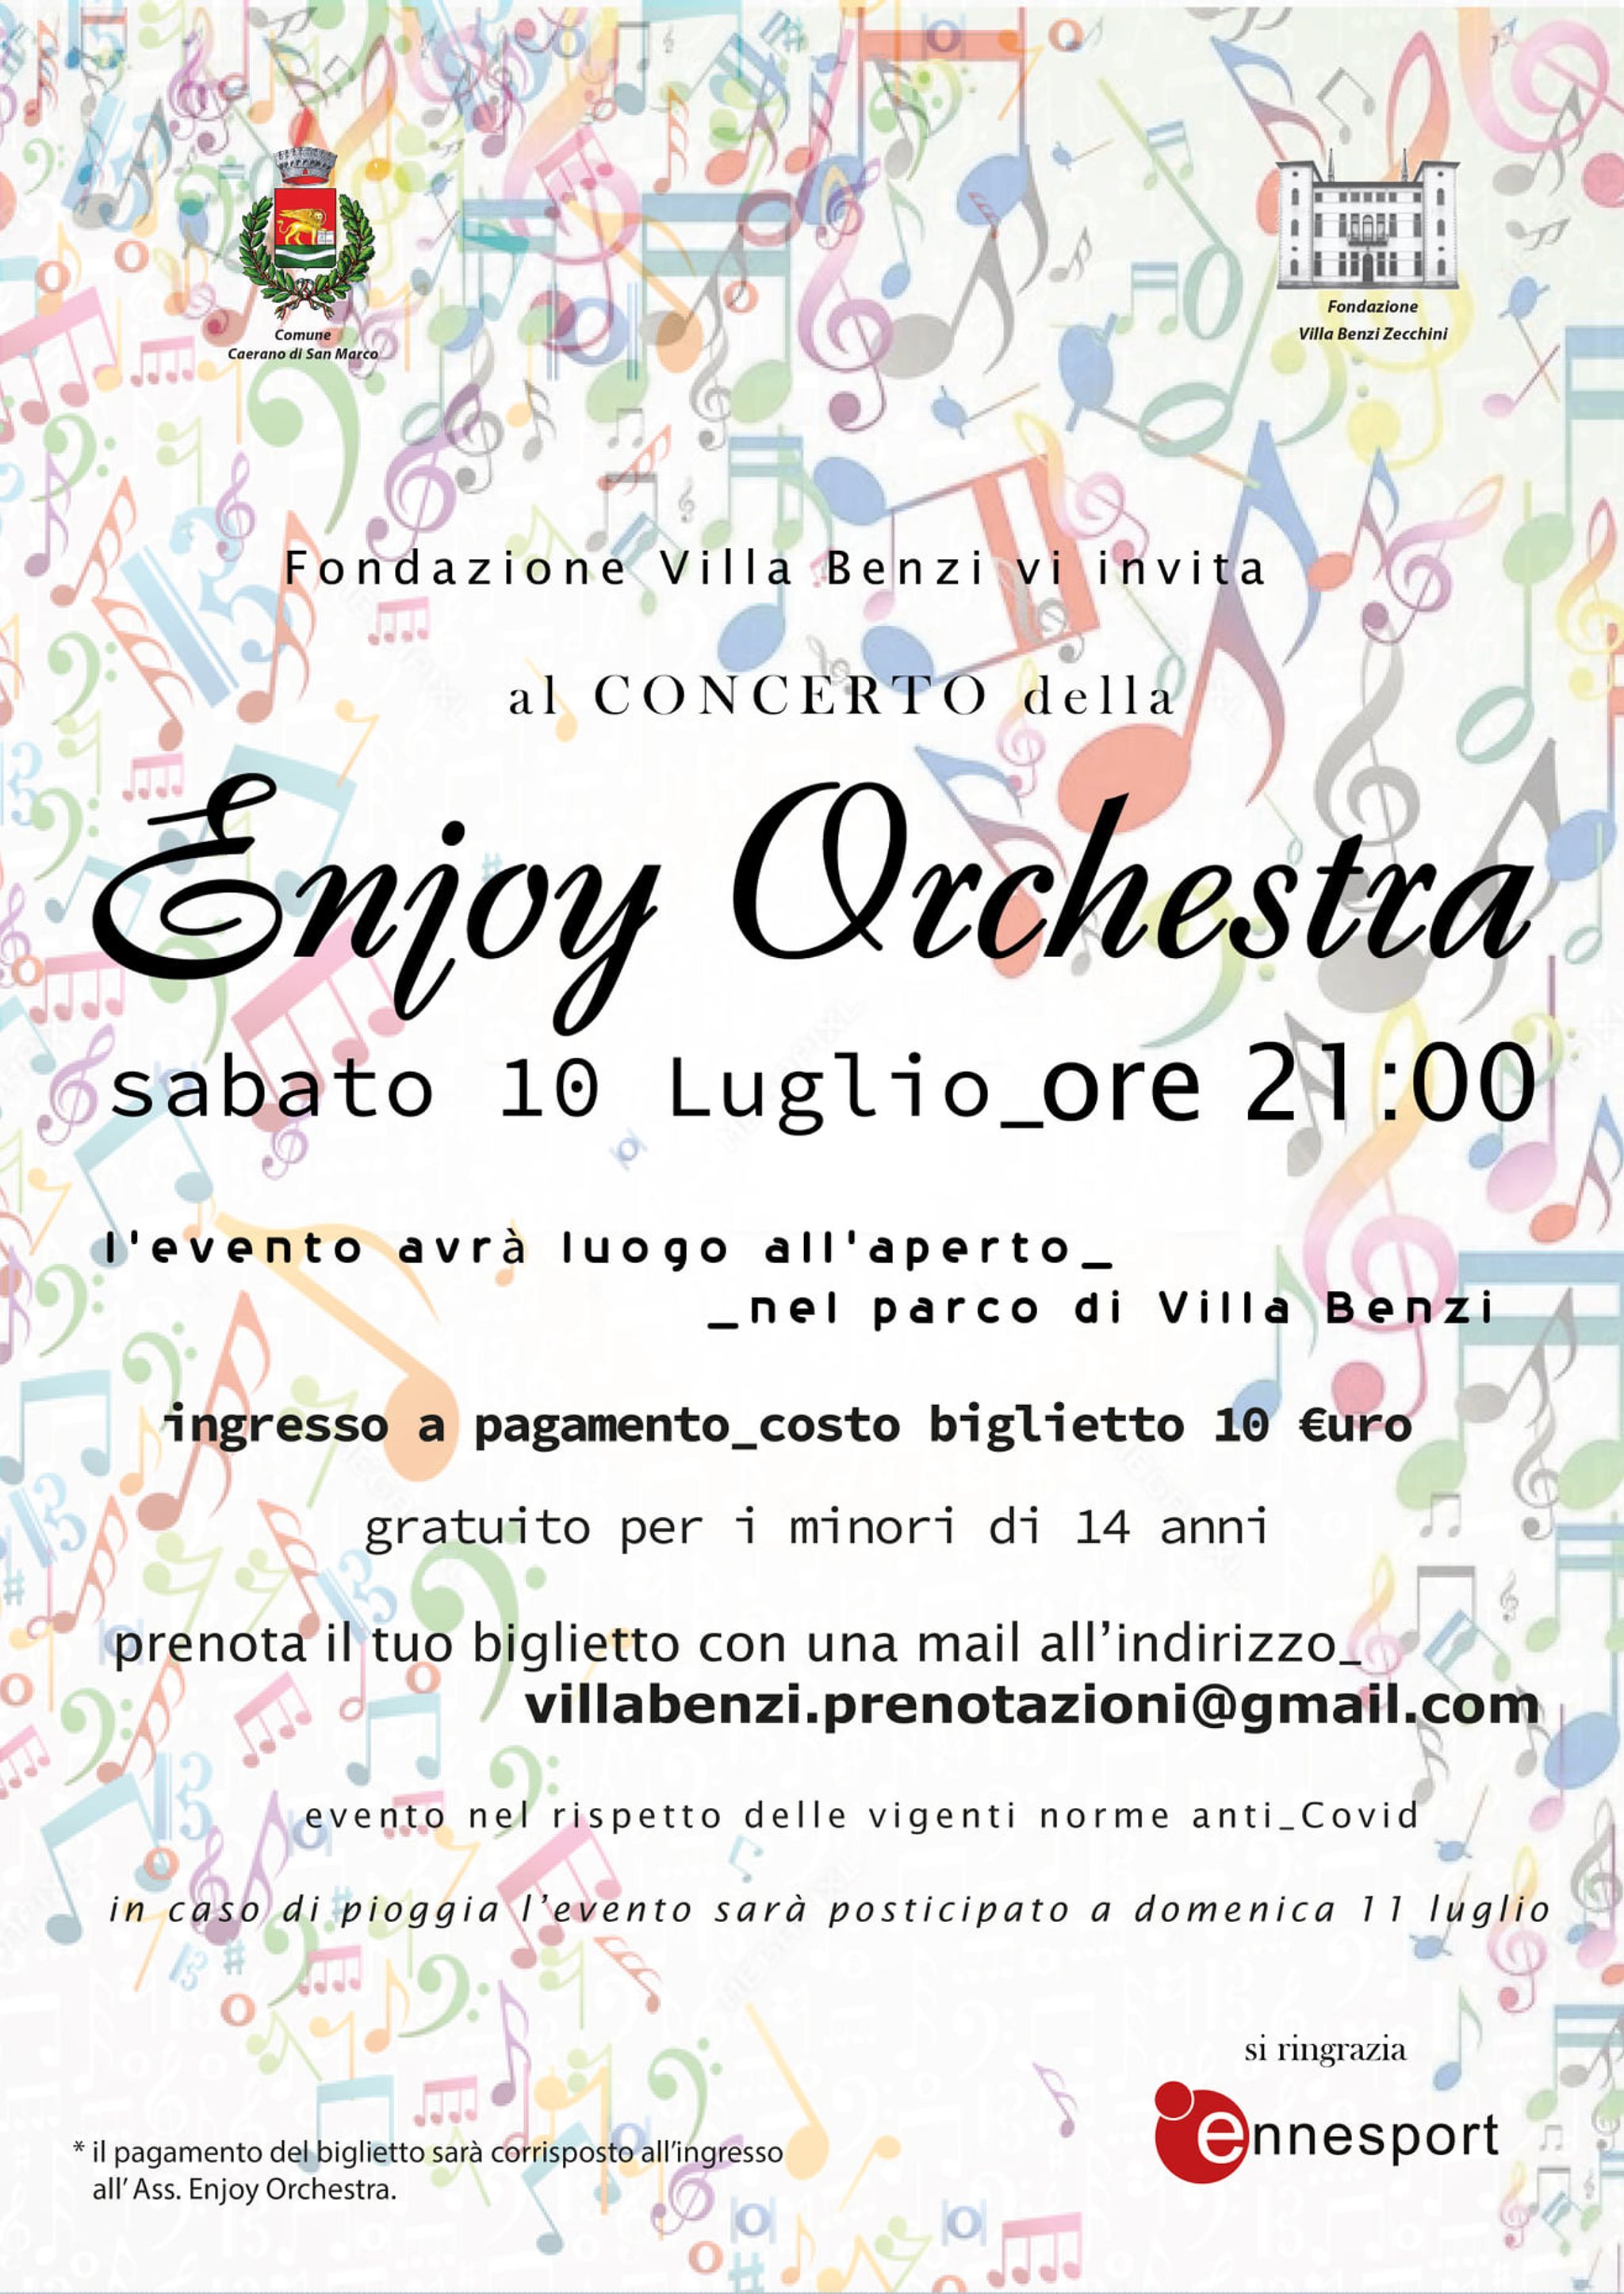 Enjoy Orchestra in concerto